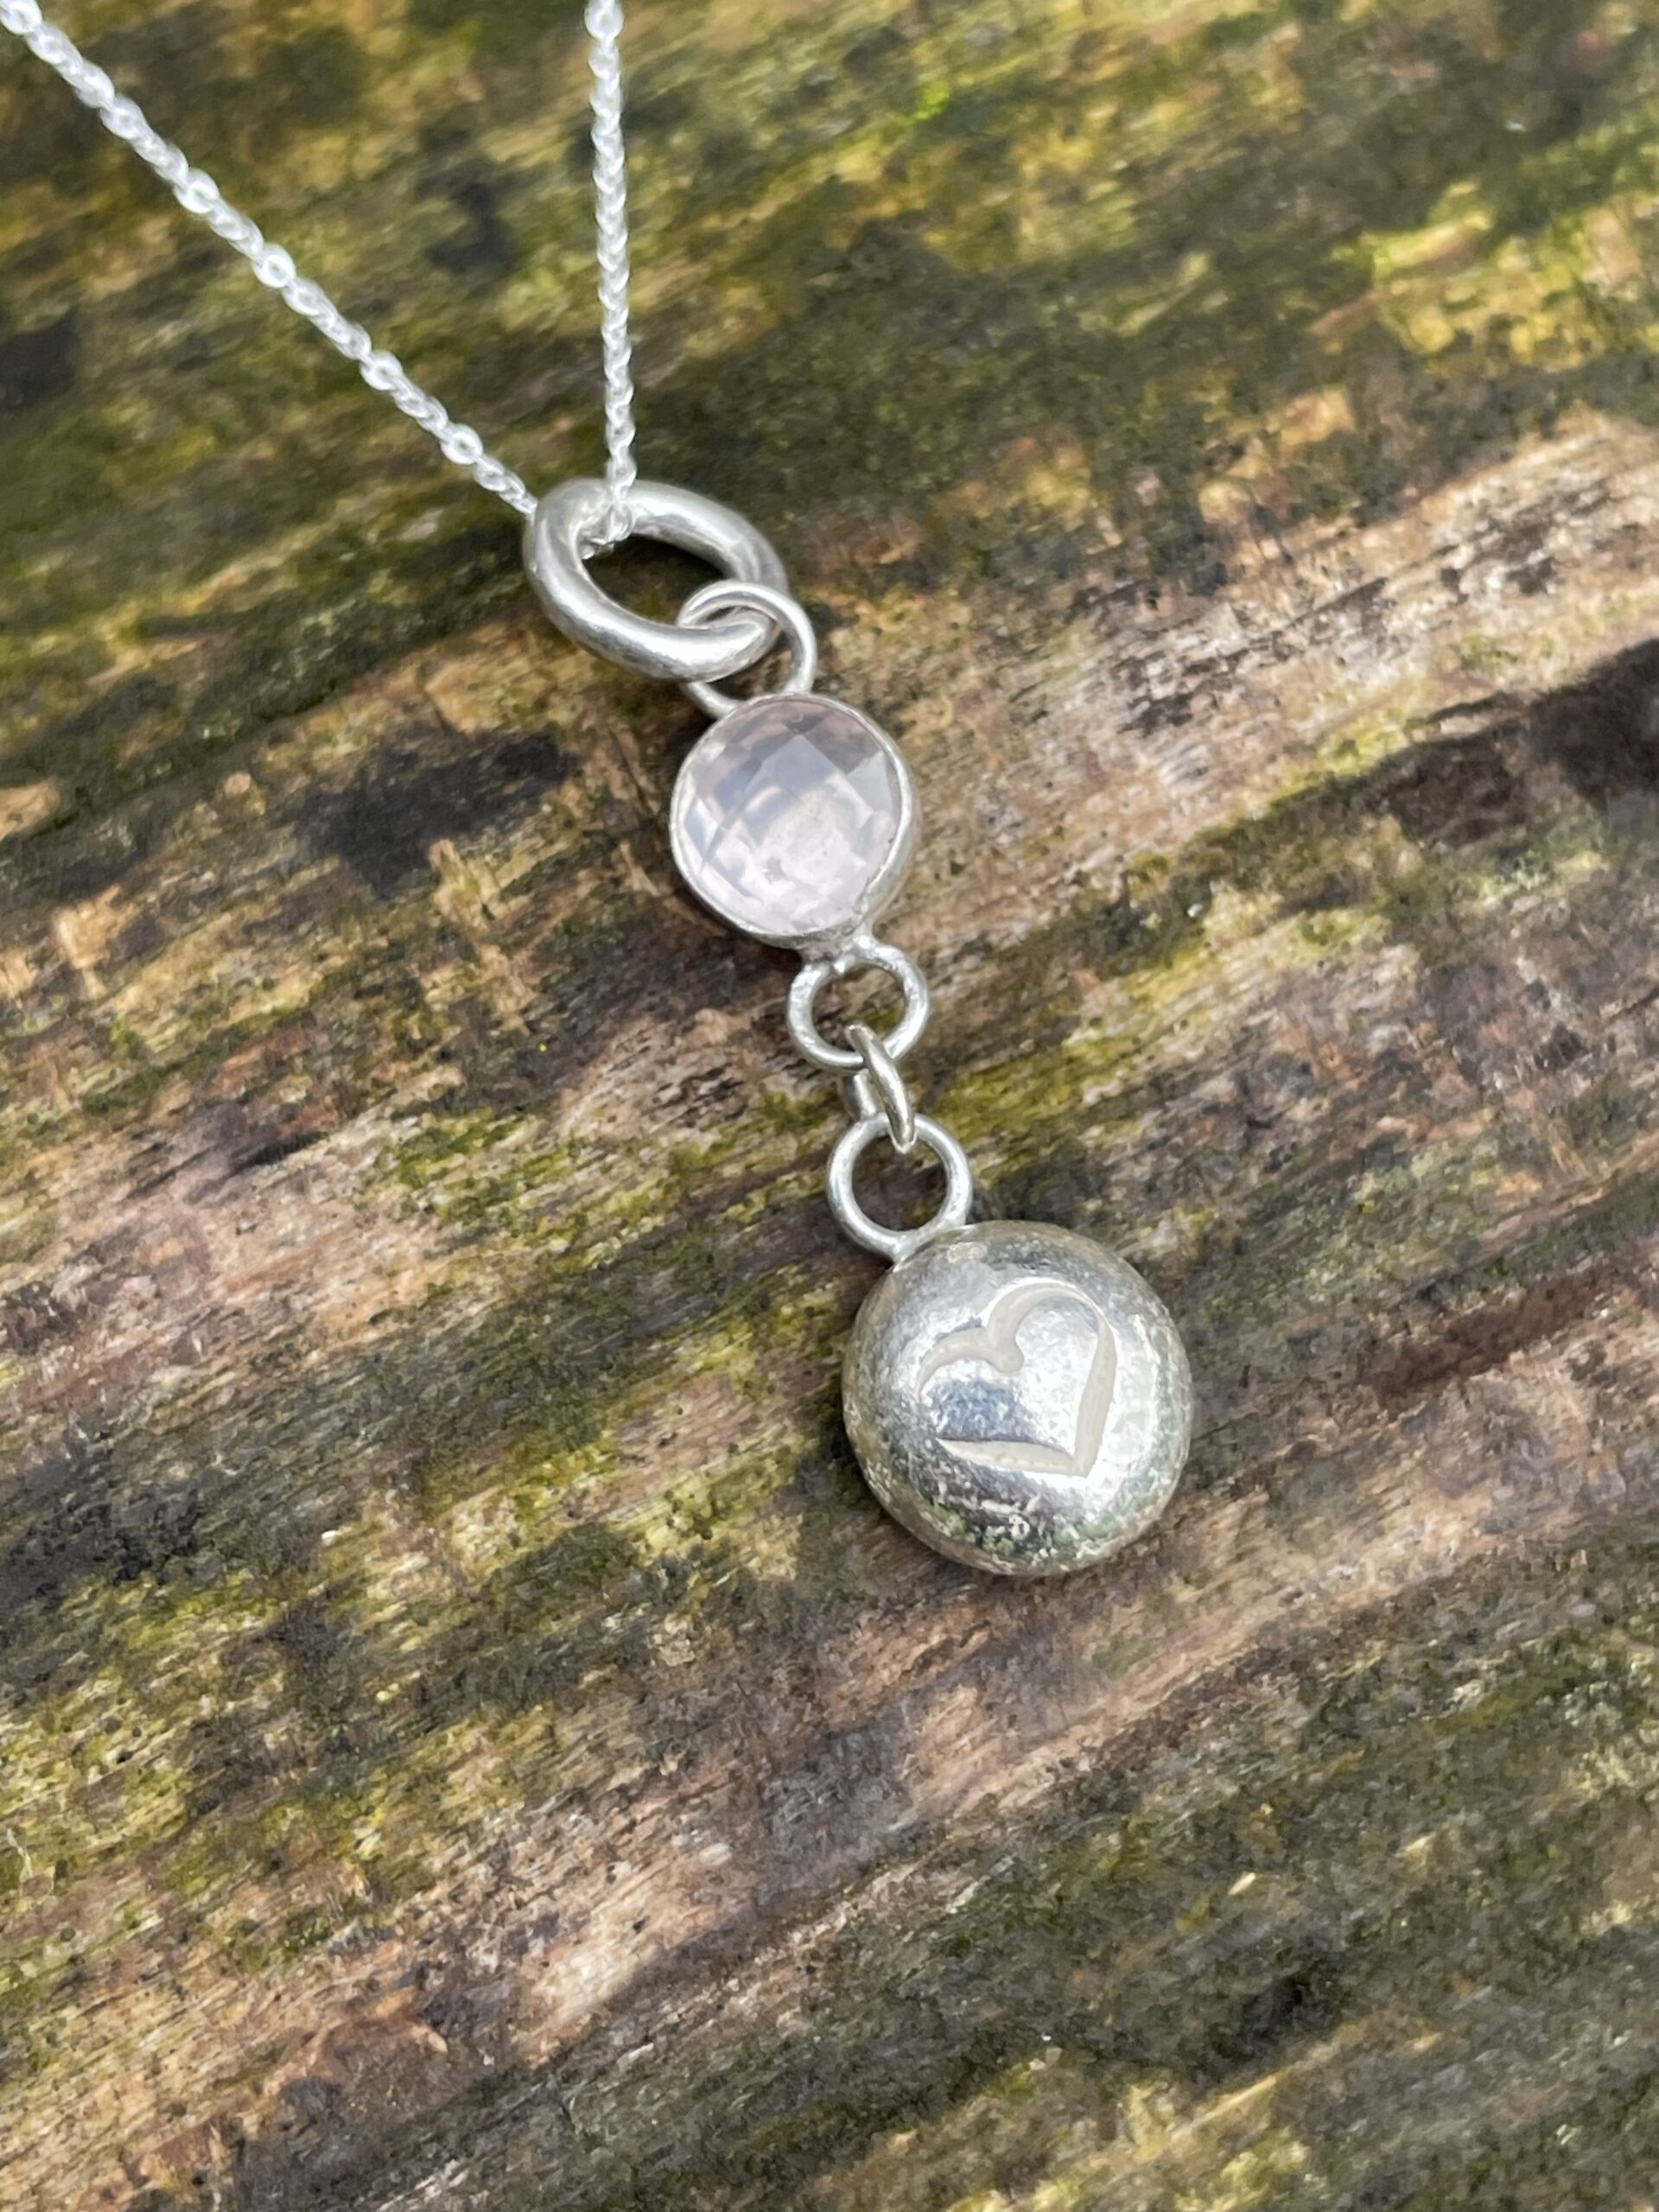 Chilli Designs rose quartz and heart pendant necklace